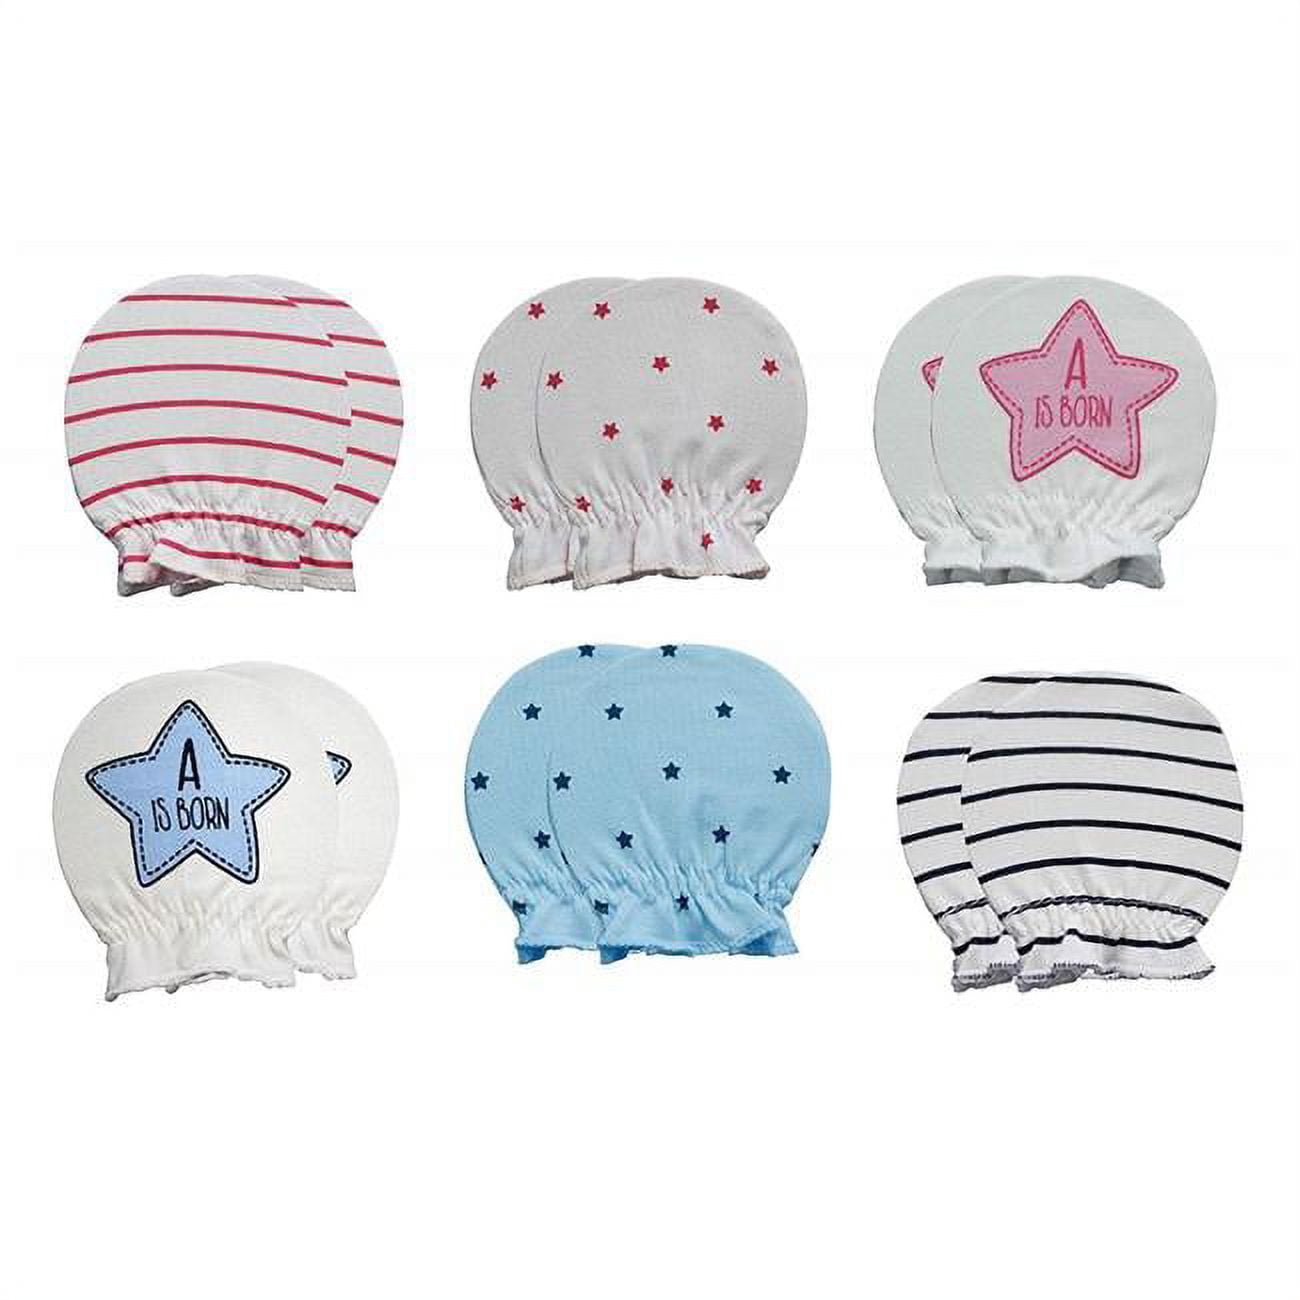 Bm 601 Mittens Baby Shower Gift Set, Pink & Blue - Pack Of 6